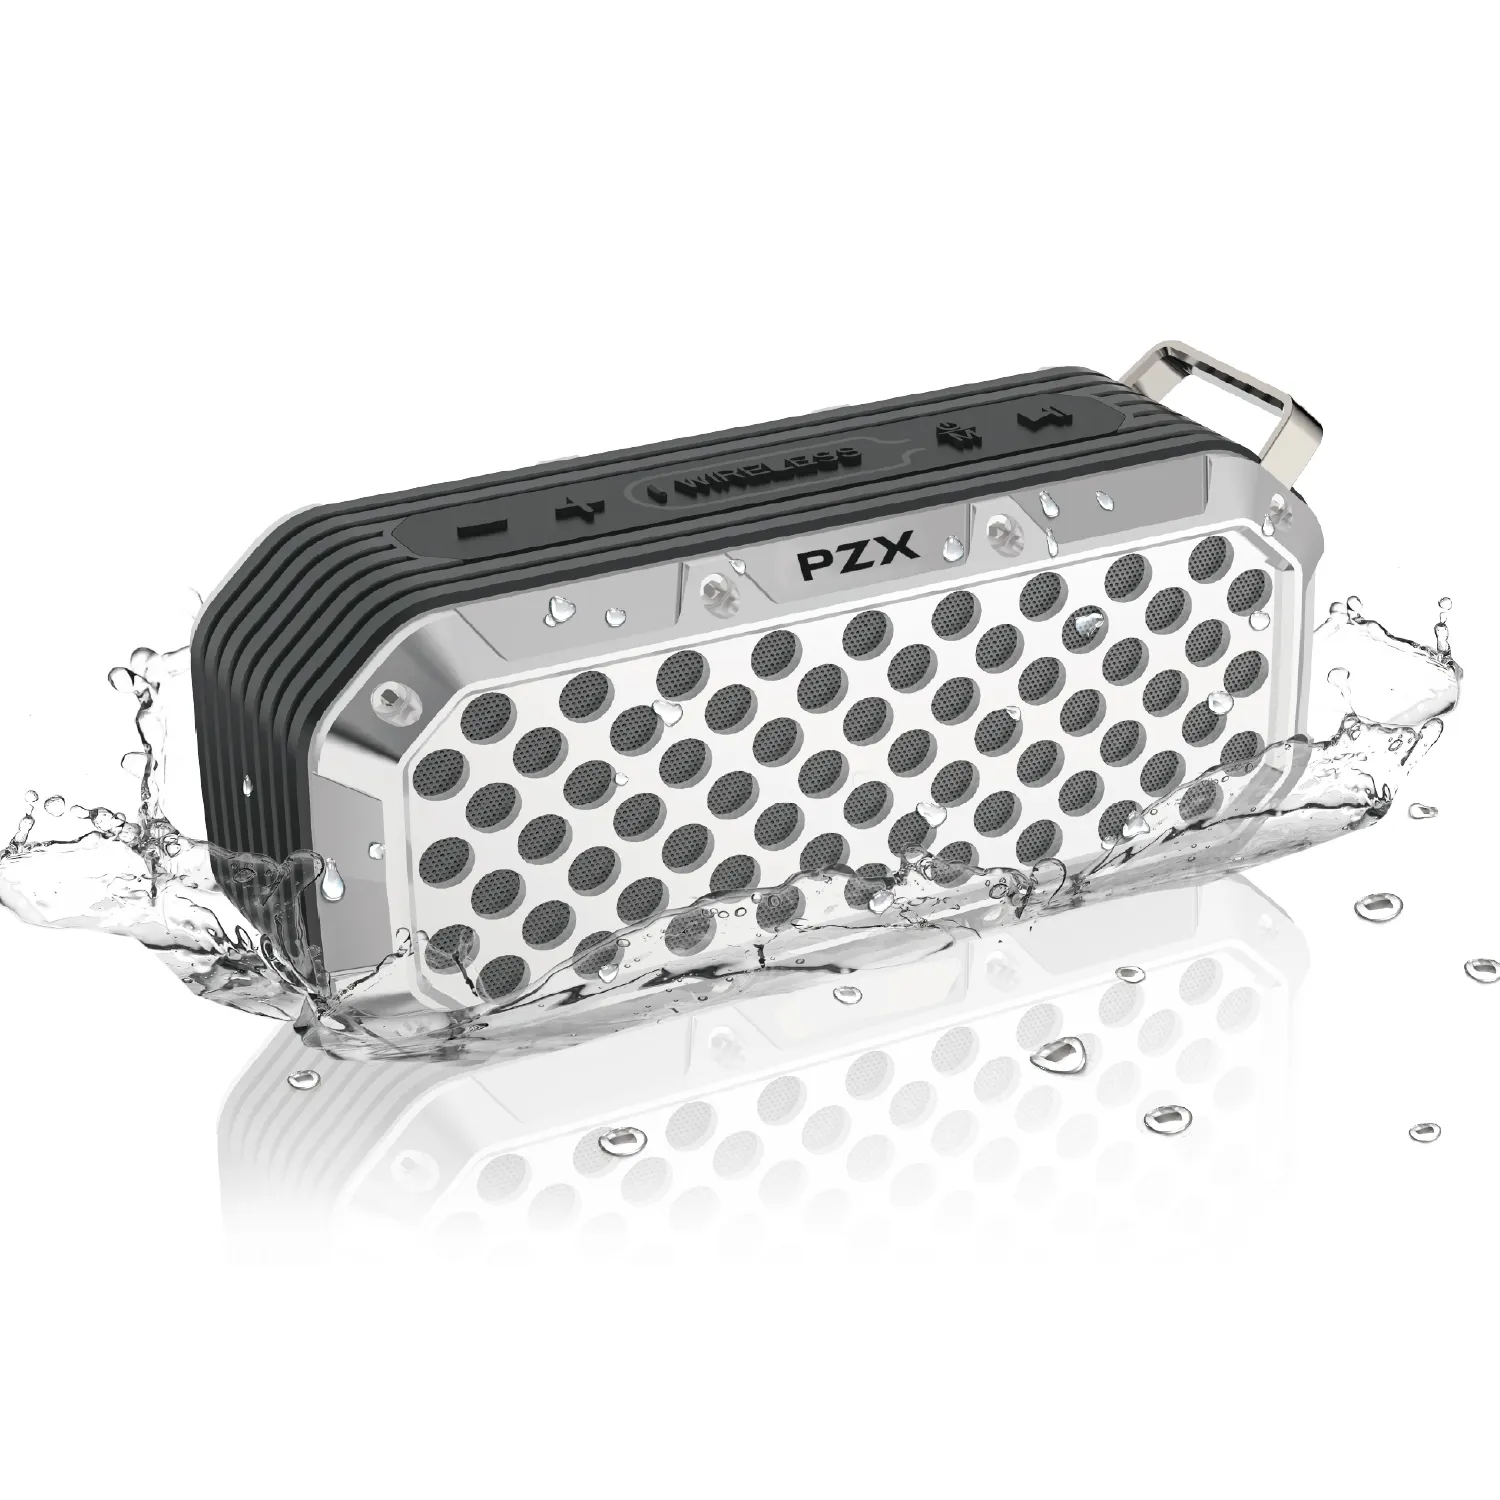 PZX المحمولة البسيطة P200 للماء BT5.0 اللاسلكية سوبر باس مشغل الصوت ايفي FM TF بطاقة صندوق الصوت صغير في الهواء الطلق المتكلم